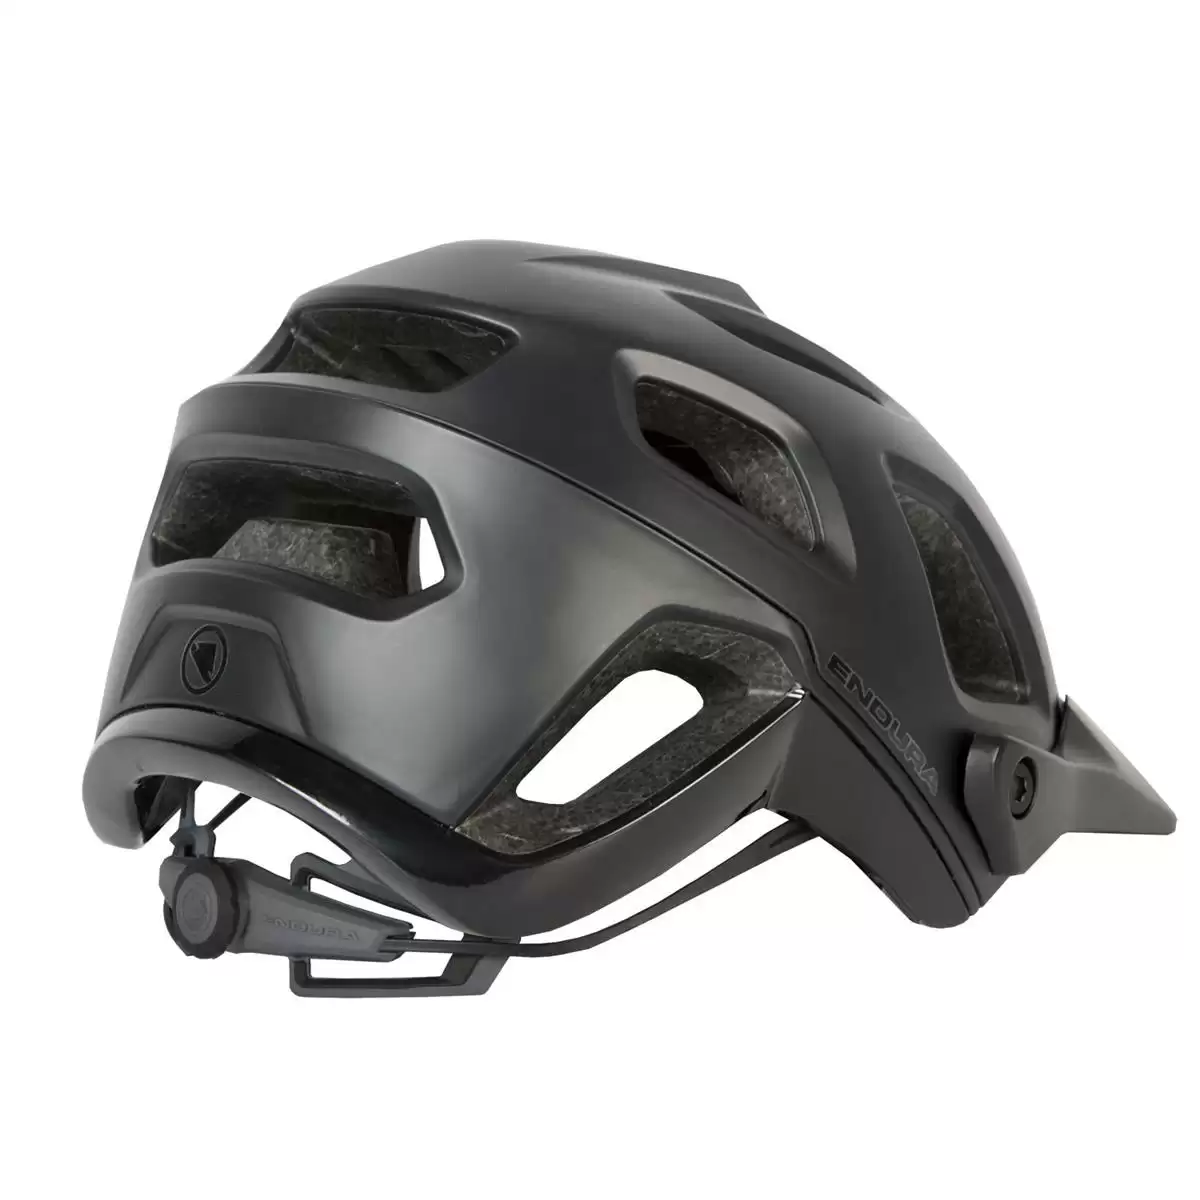 helmet SingleTrack Helmet II black size S/M (51-56cm) #1